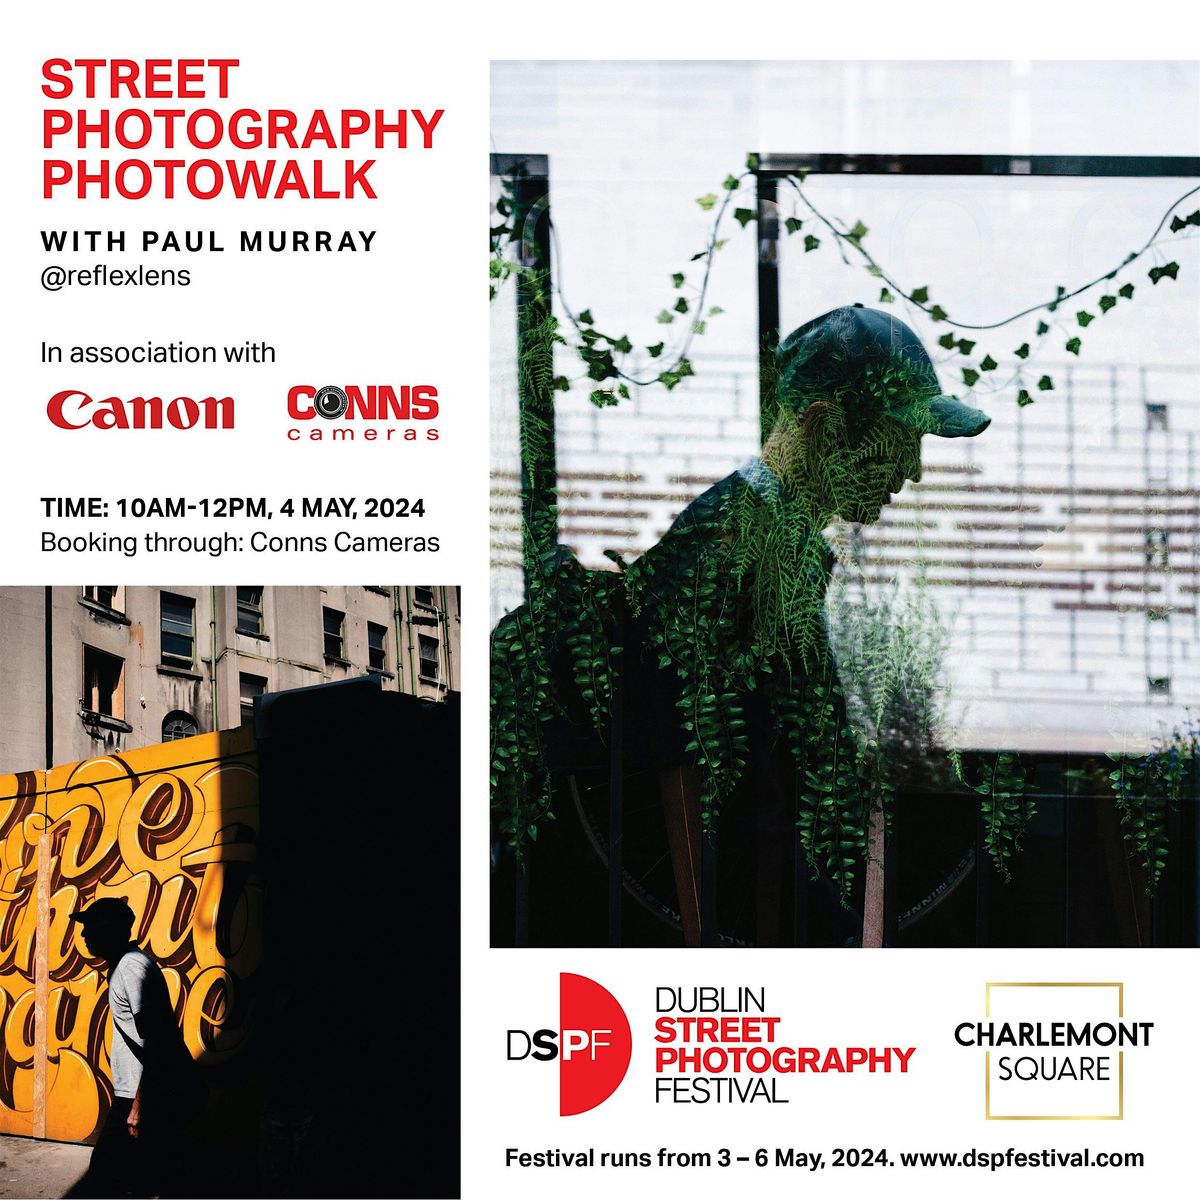 Street Photography Photowalk